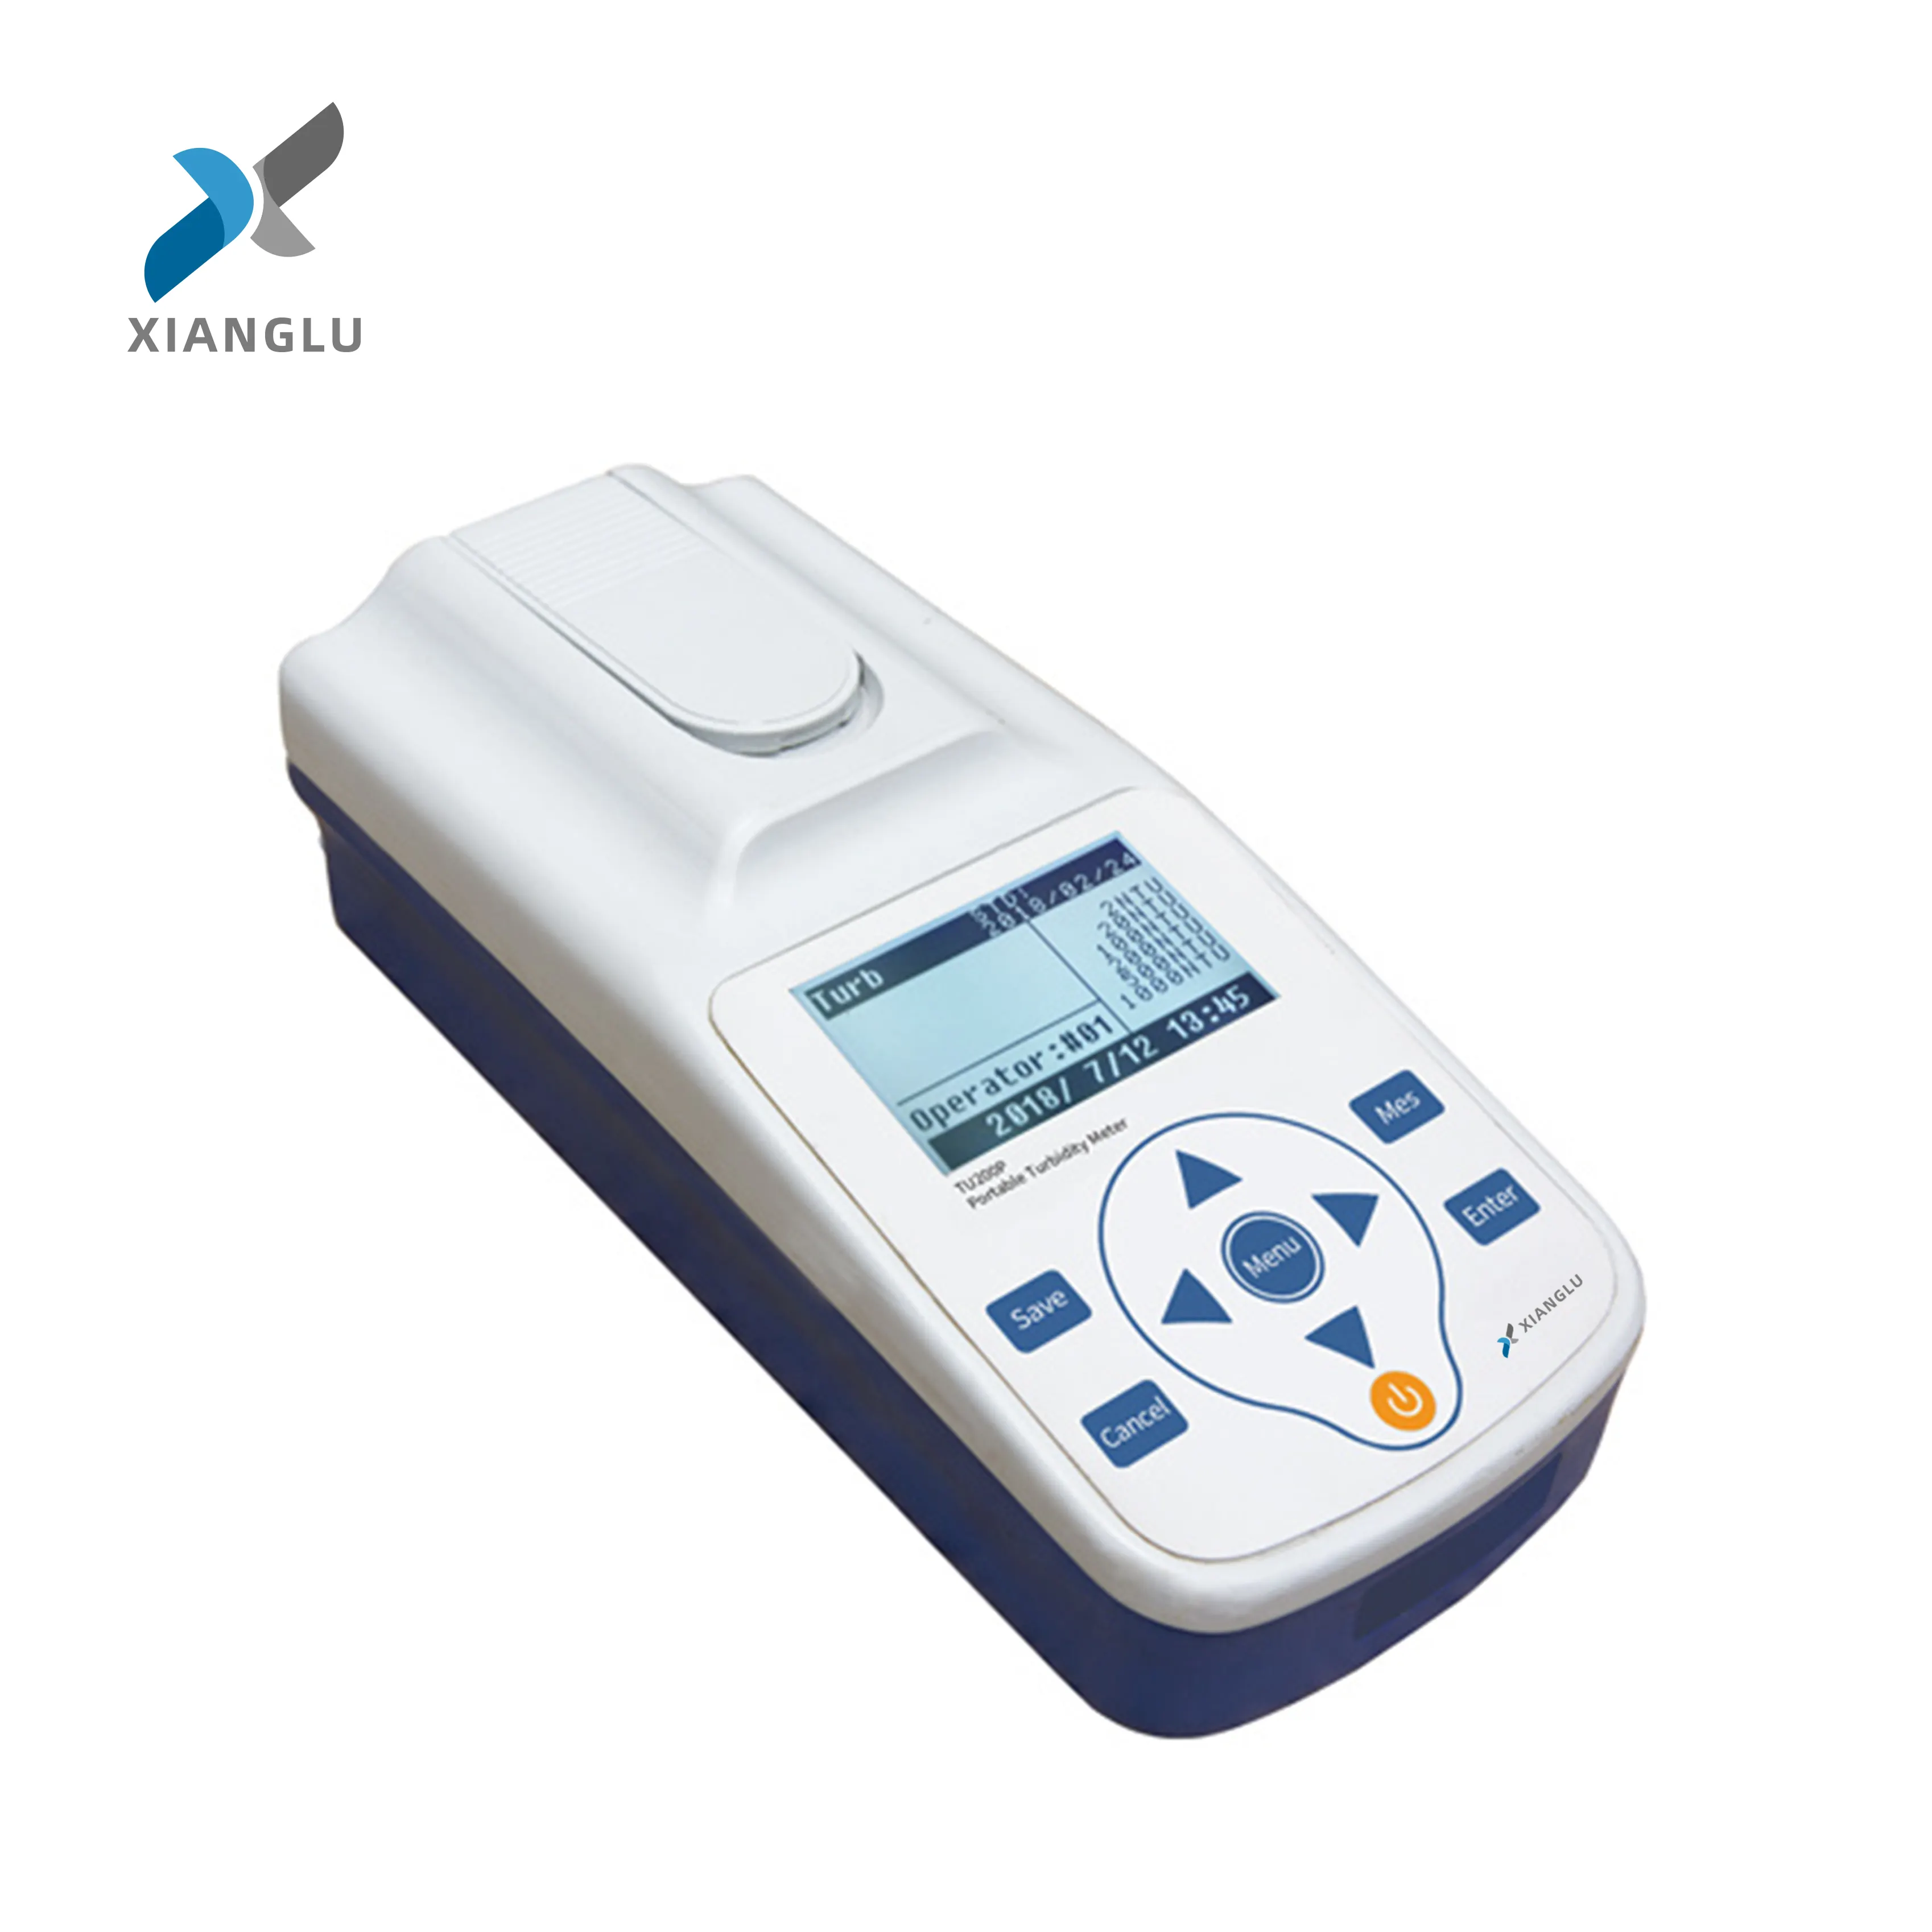 XIANGLU Laboratory instrument OEM available portable tss meter turbidimeter portable turbidity meter with factory price